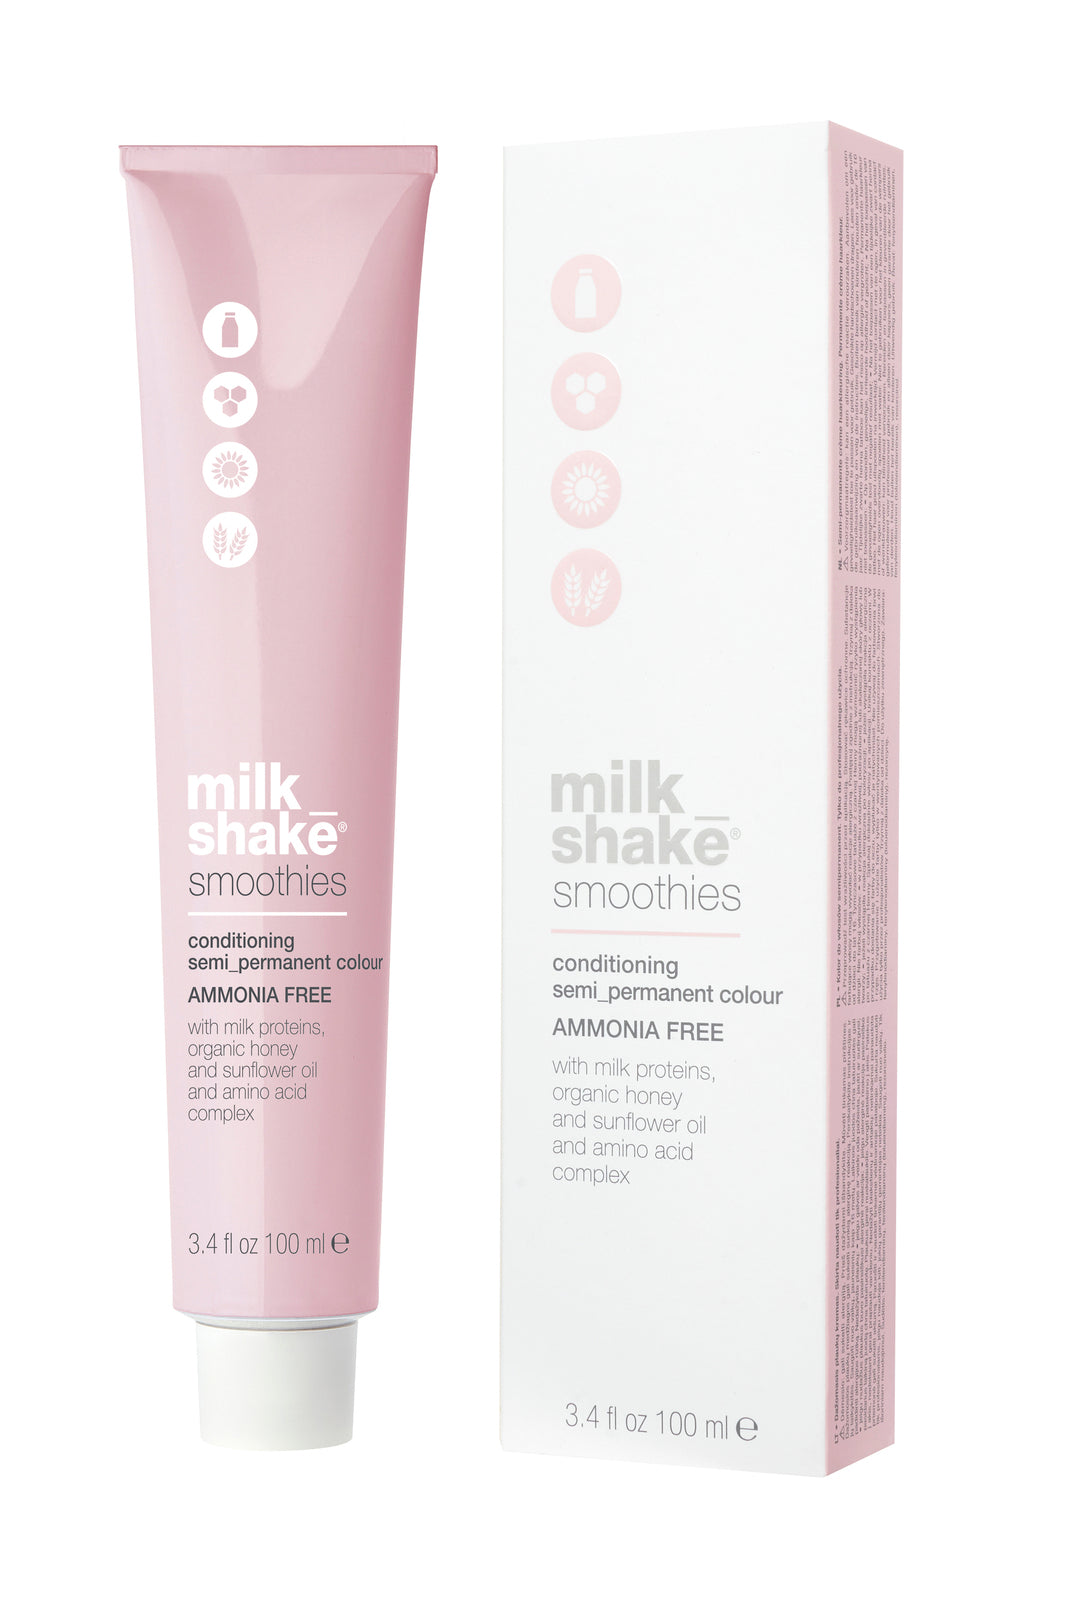 Milkshake smoothies semi-permanent color 8.43